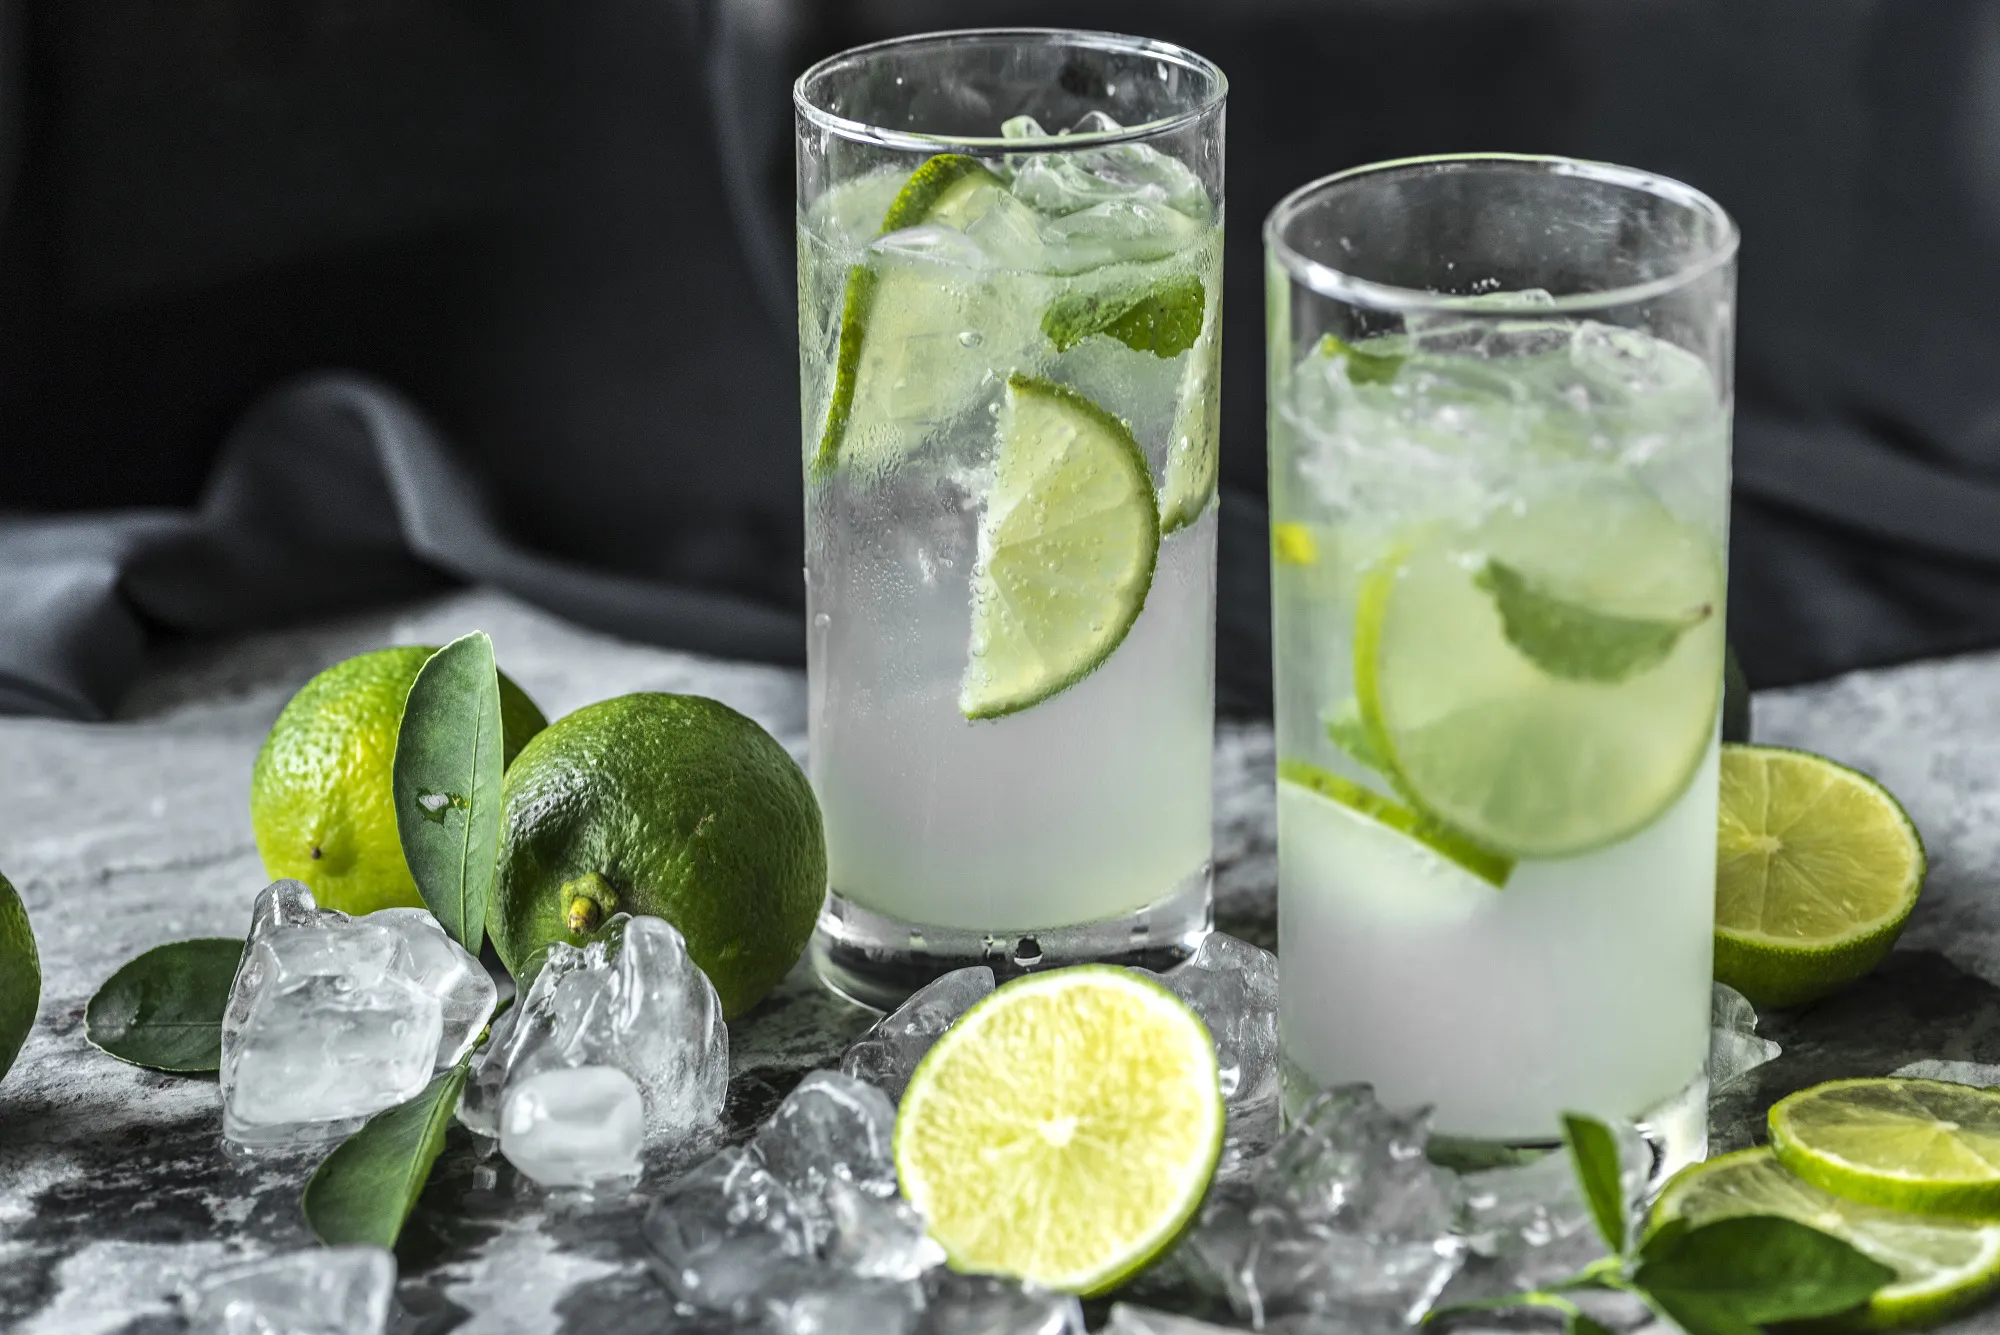 Lemonad, the worlds preferred summer beverage